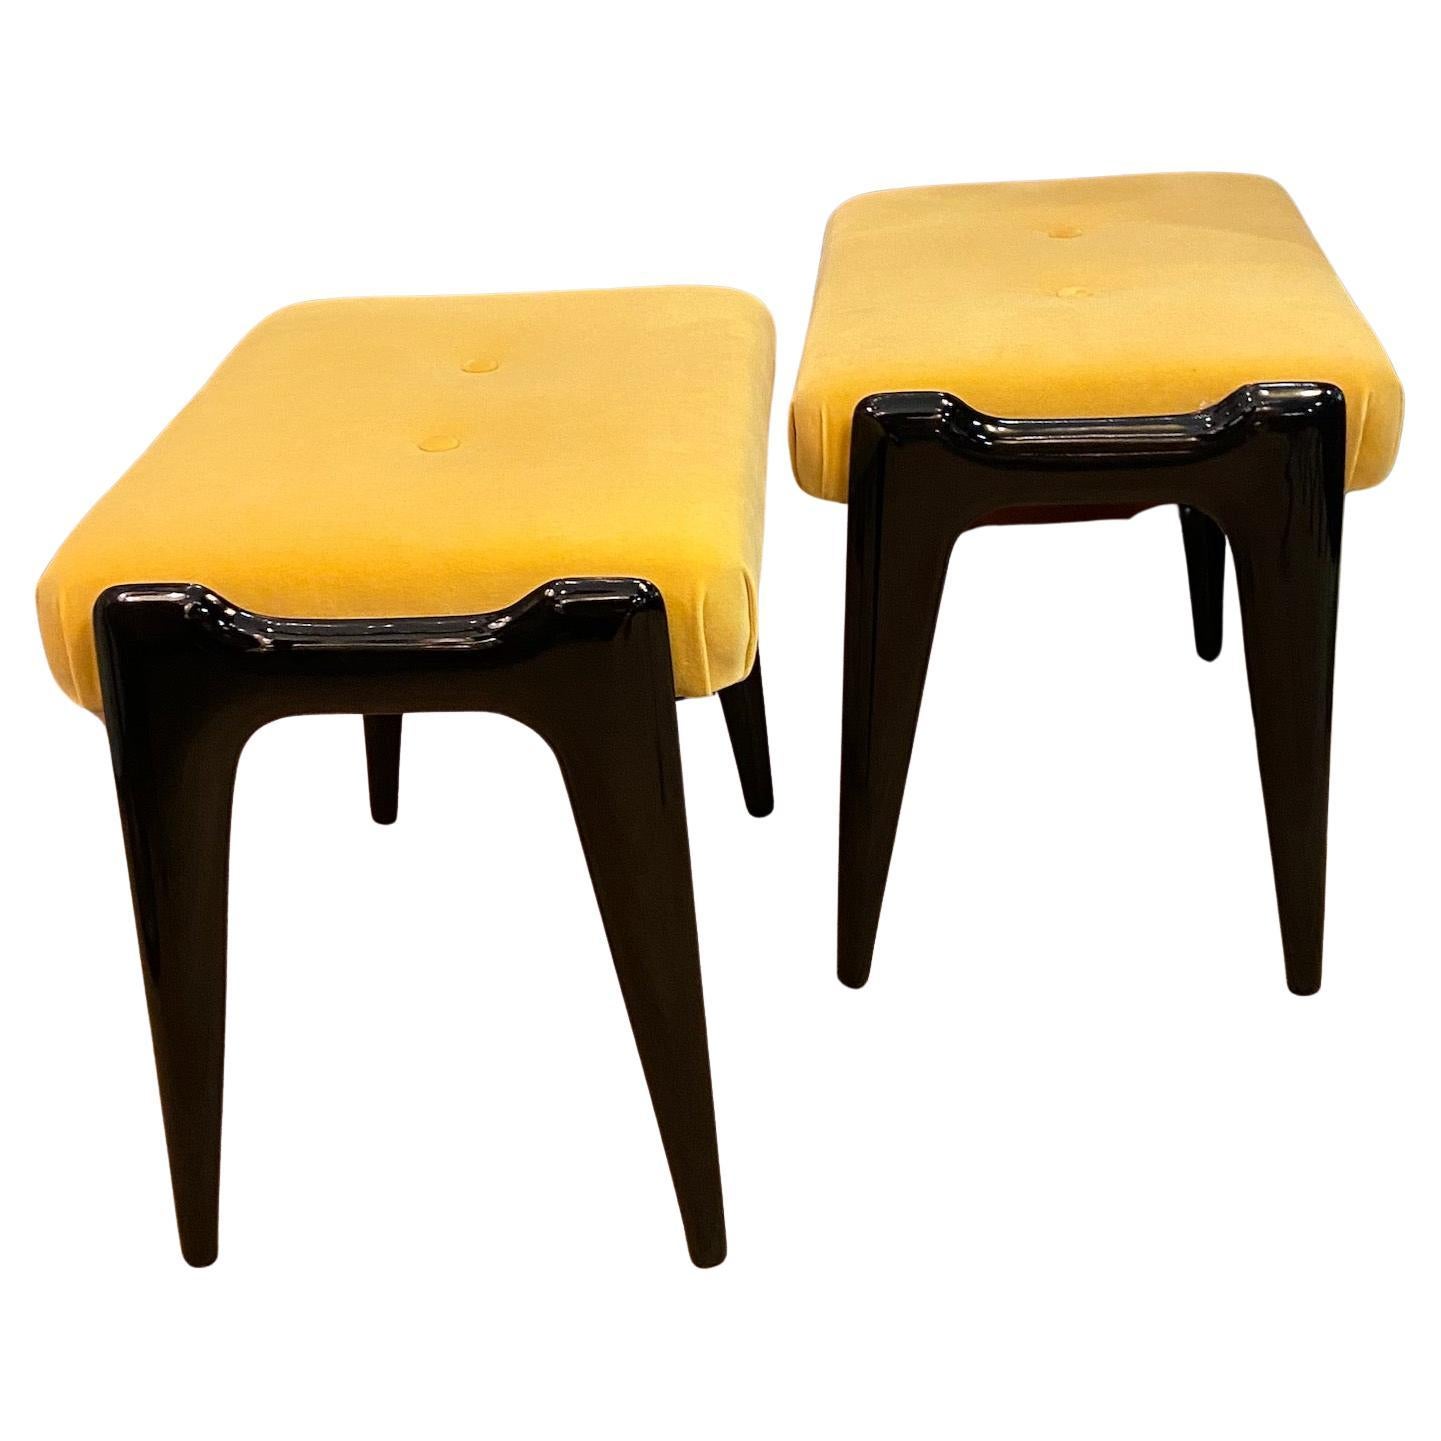 Ebonized A pair of mid-century Italian stools, yellow velour and ebonized wooden legs